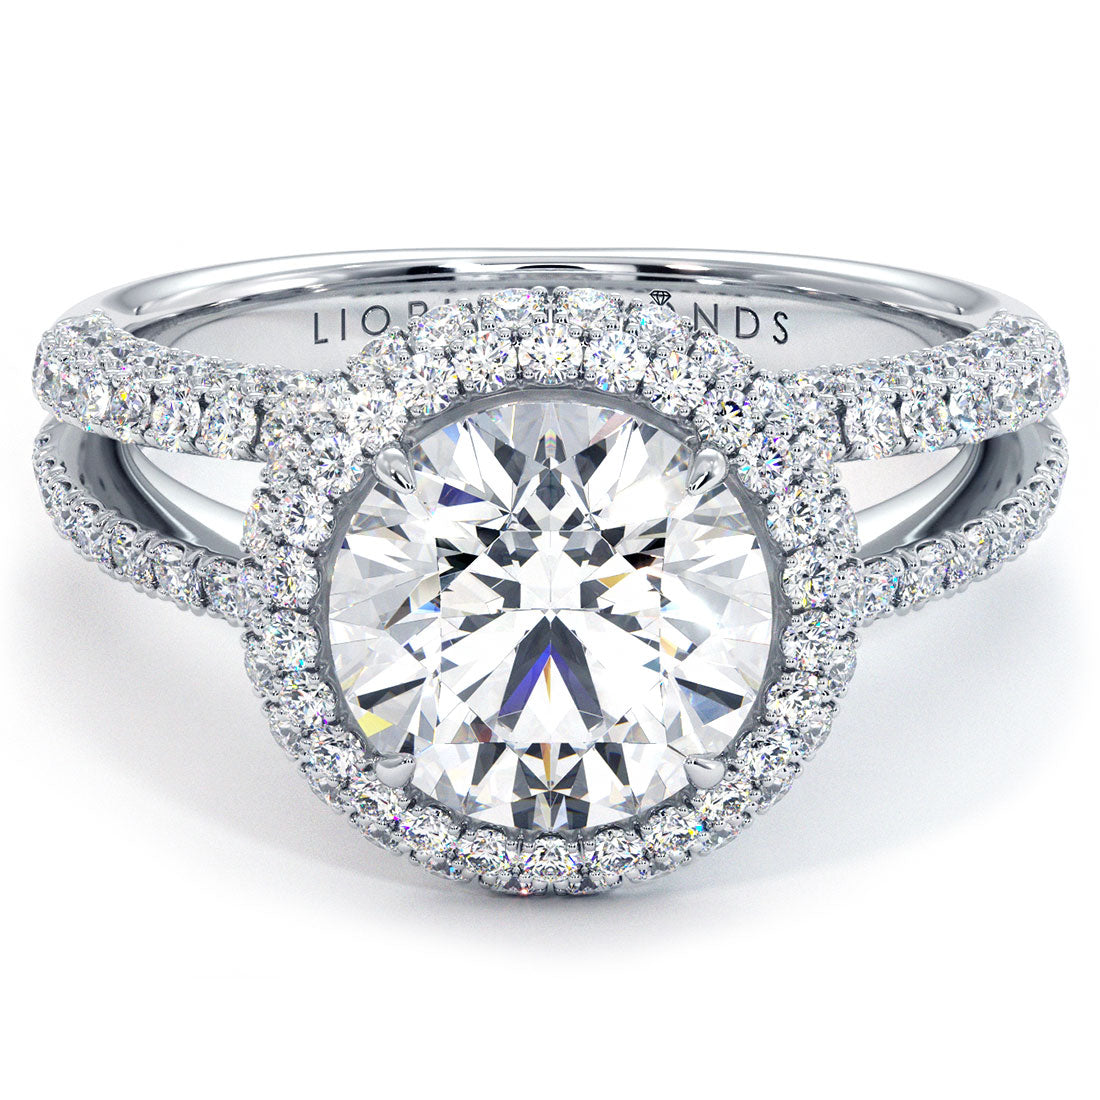 Vintage Round Diamond Engagement Ring 18k White Gold Front